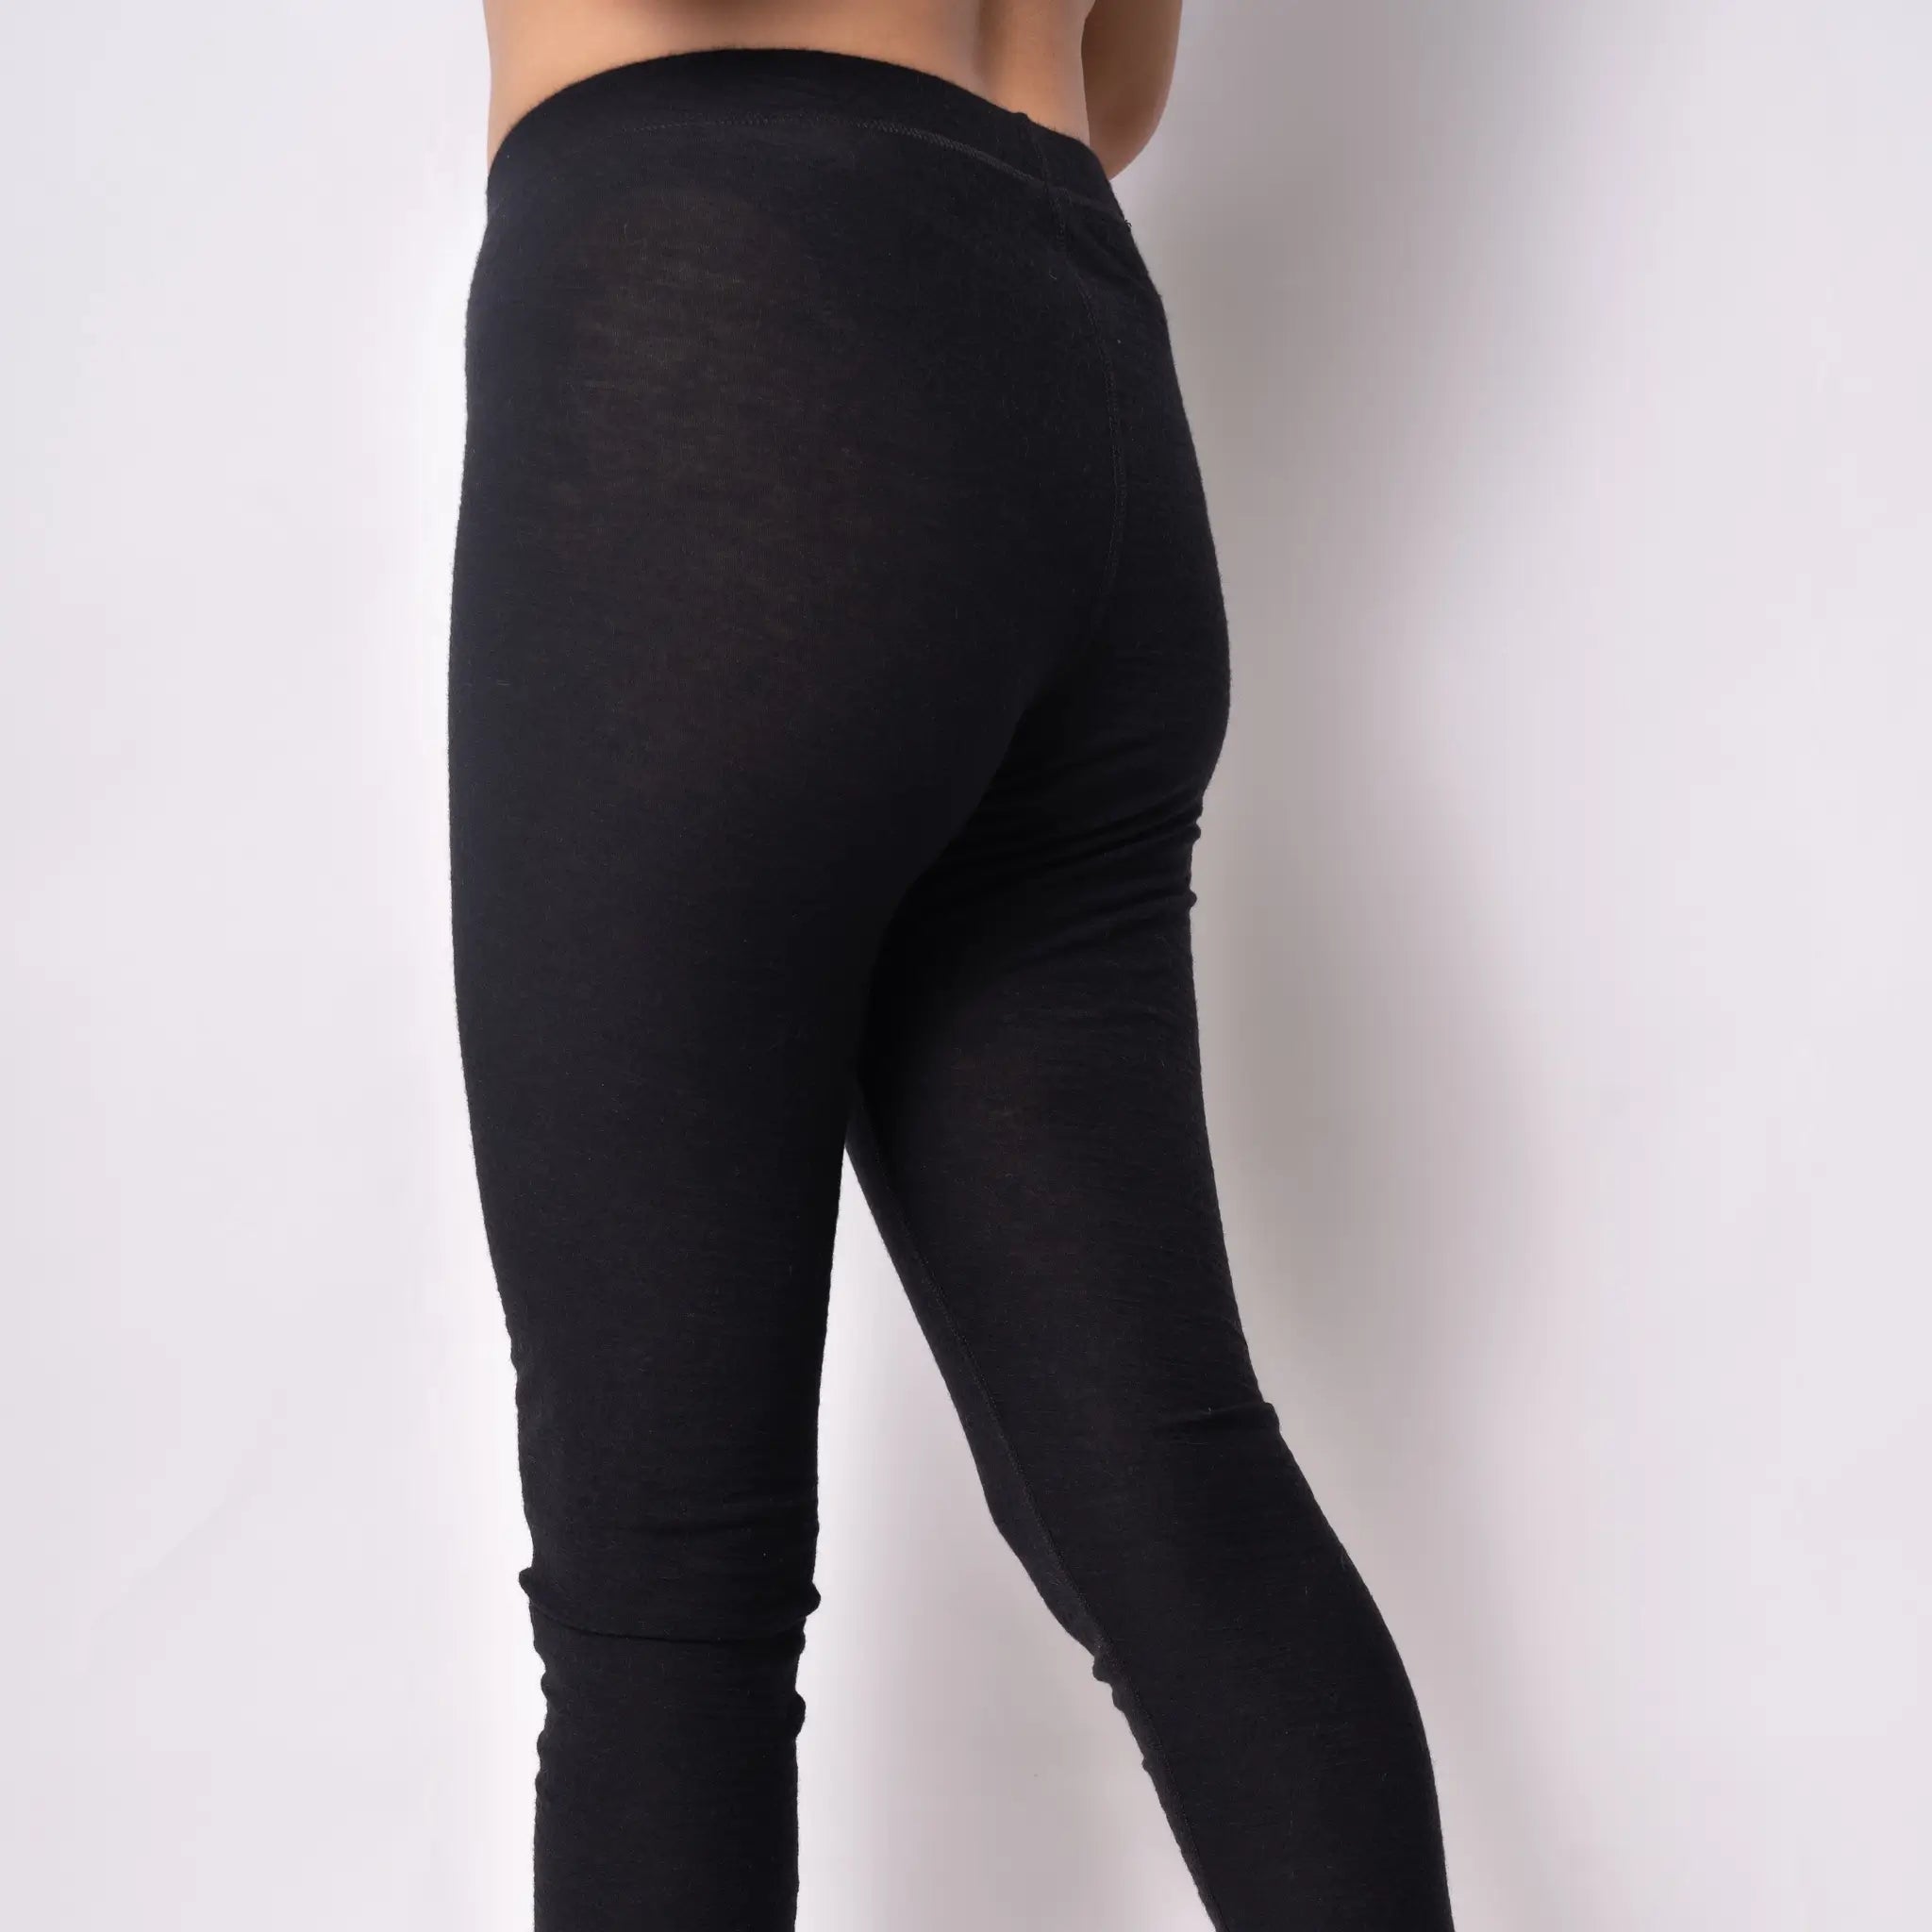 womens leggings ultralight 160 all purpose color black